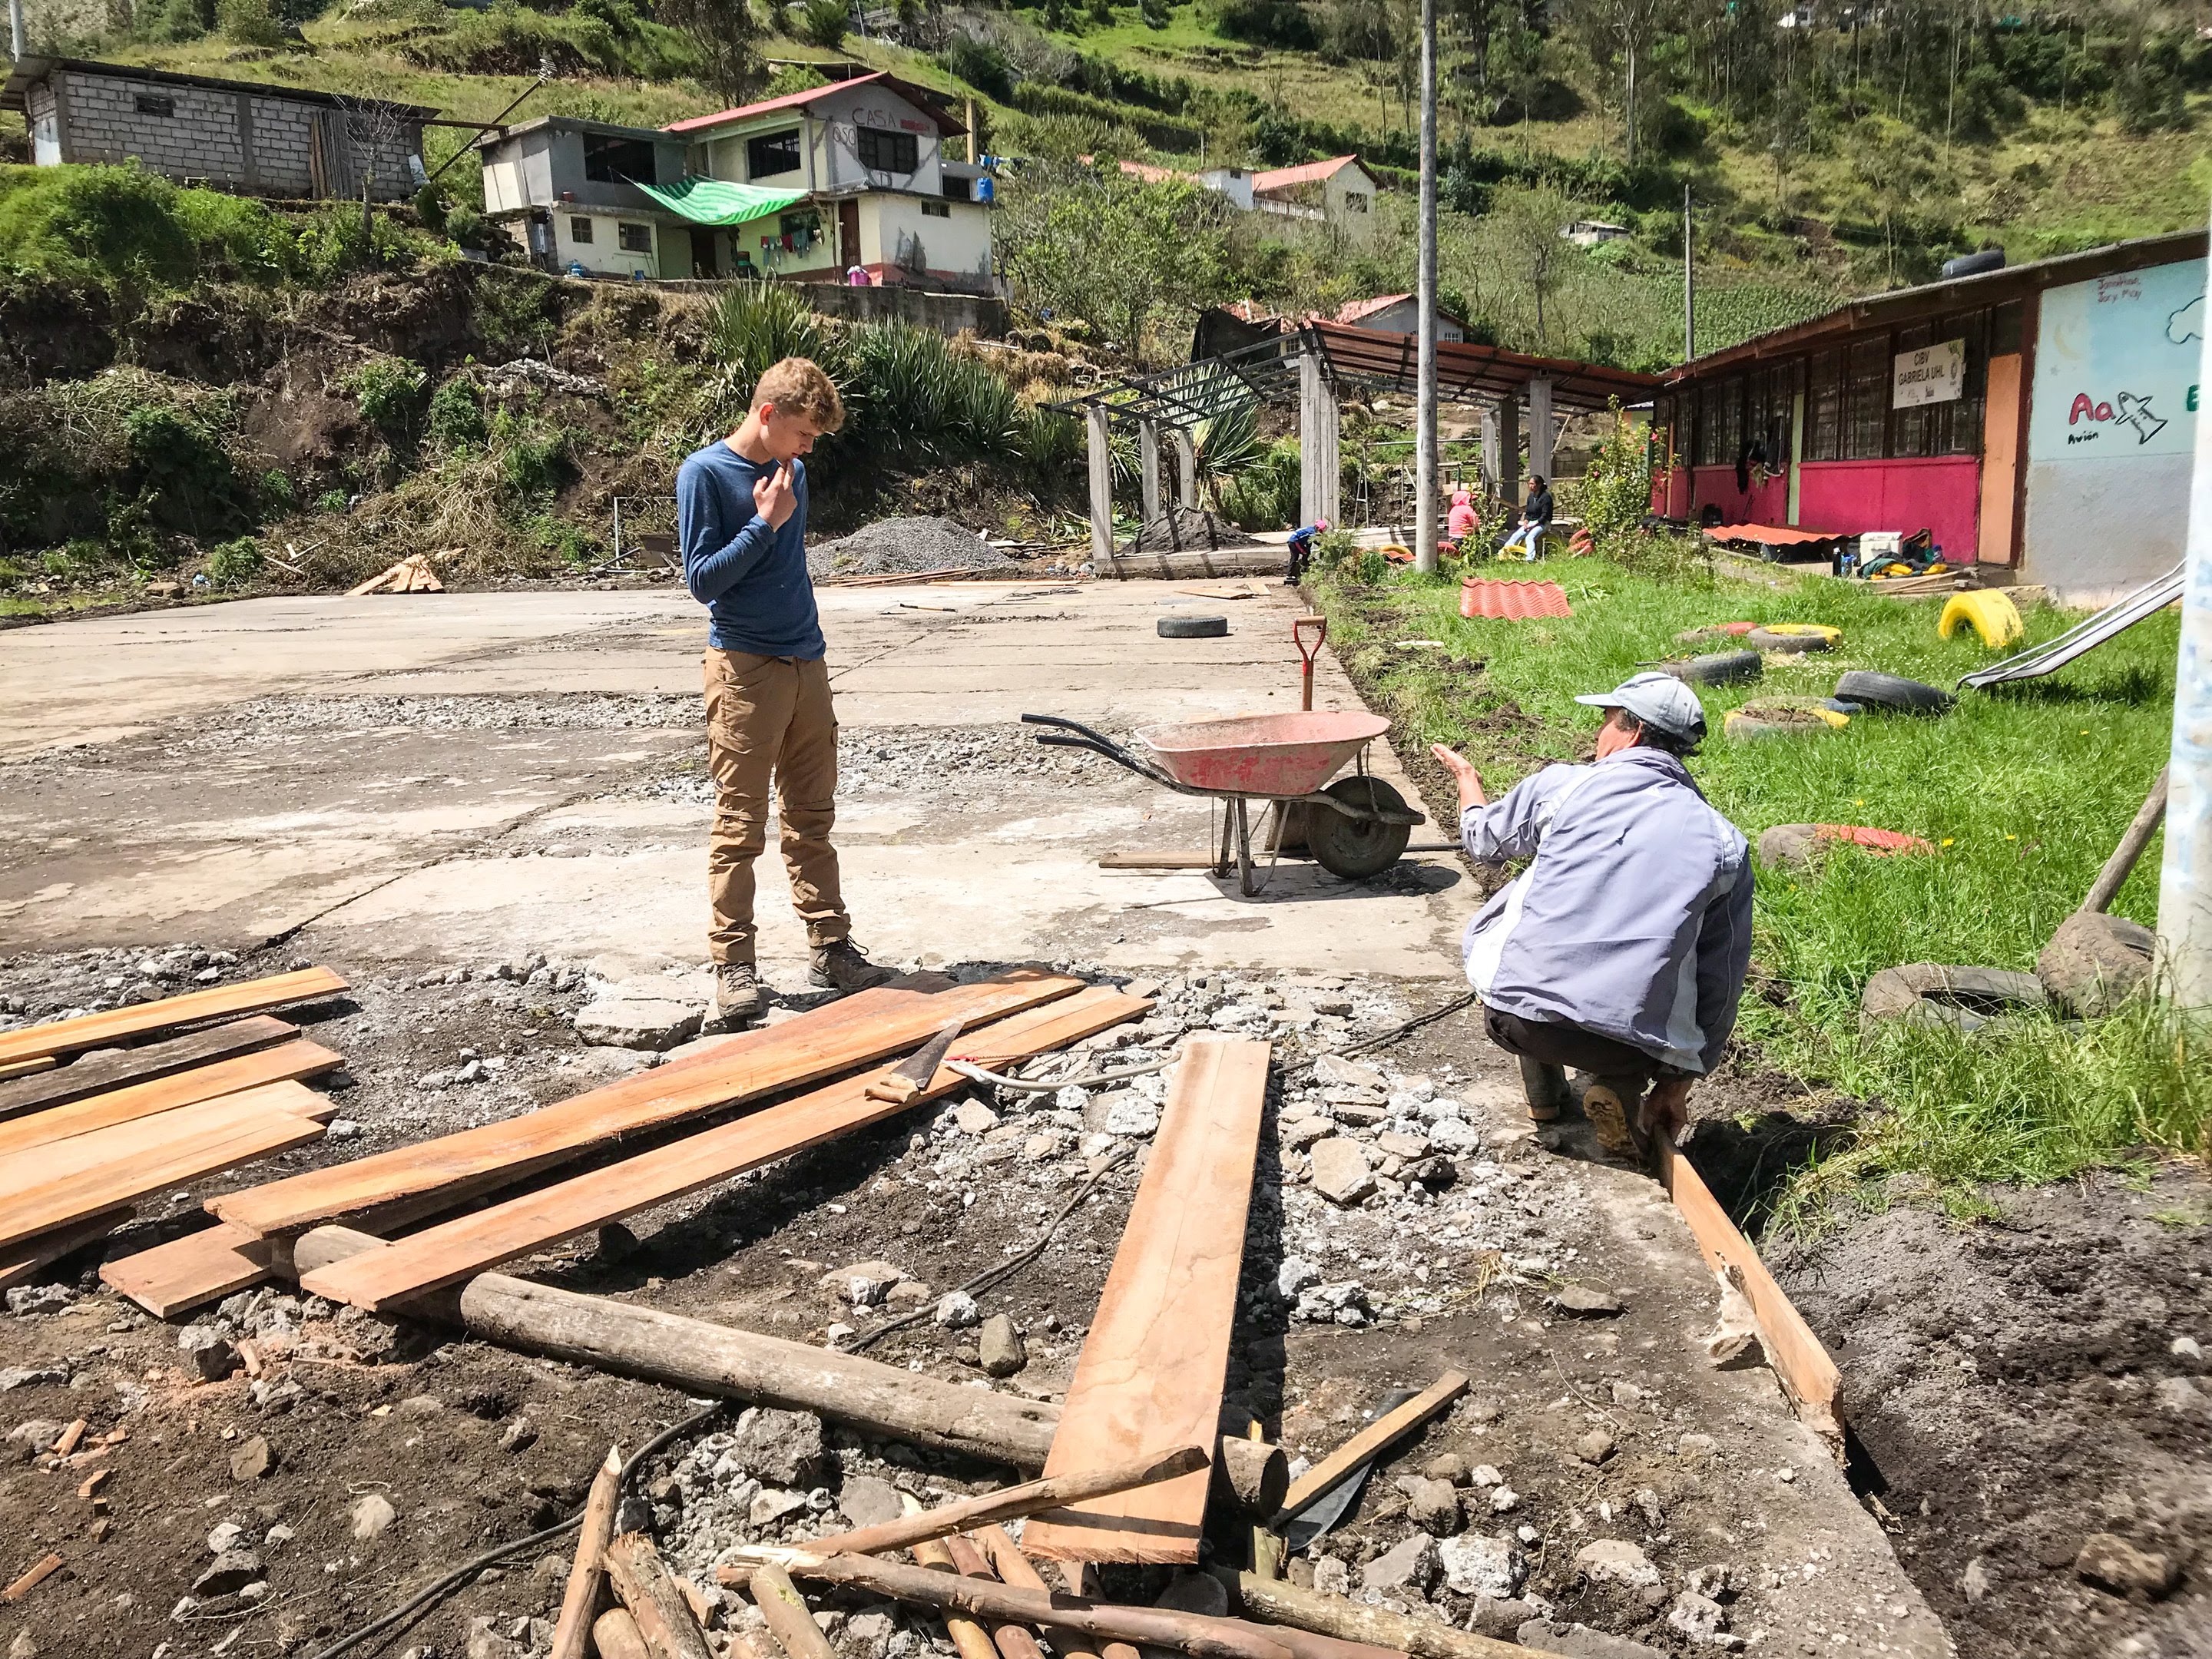 Teen volunteers helps local volunteer frame in concrete for community service project in Ecuador